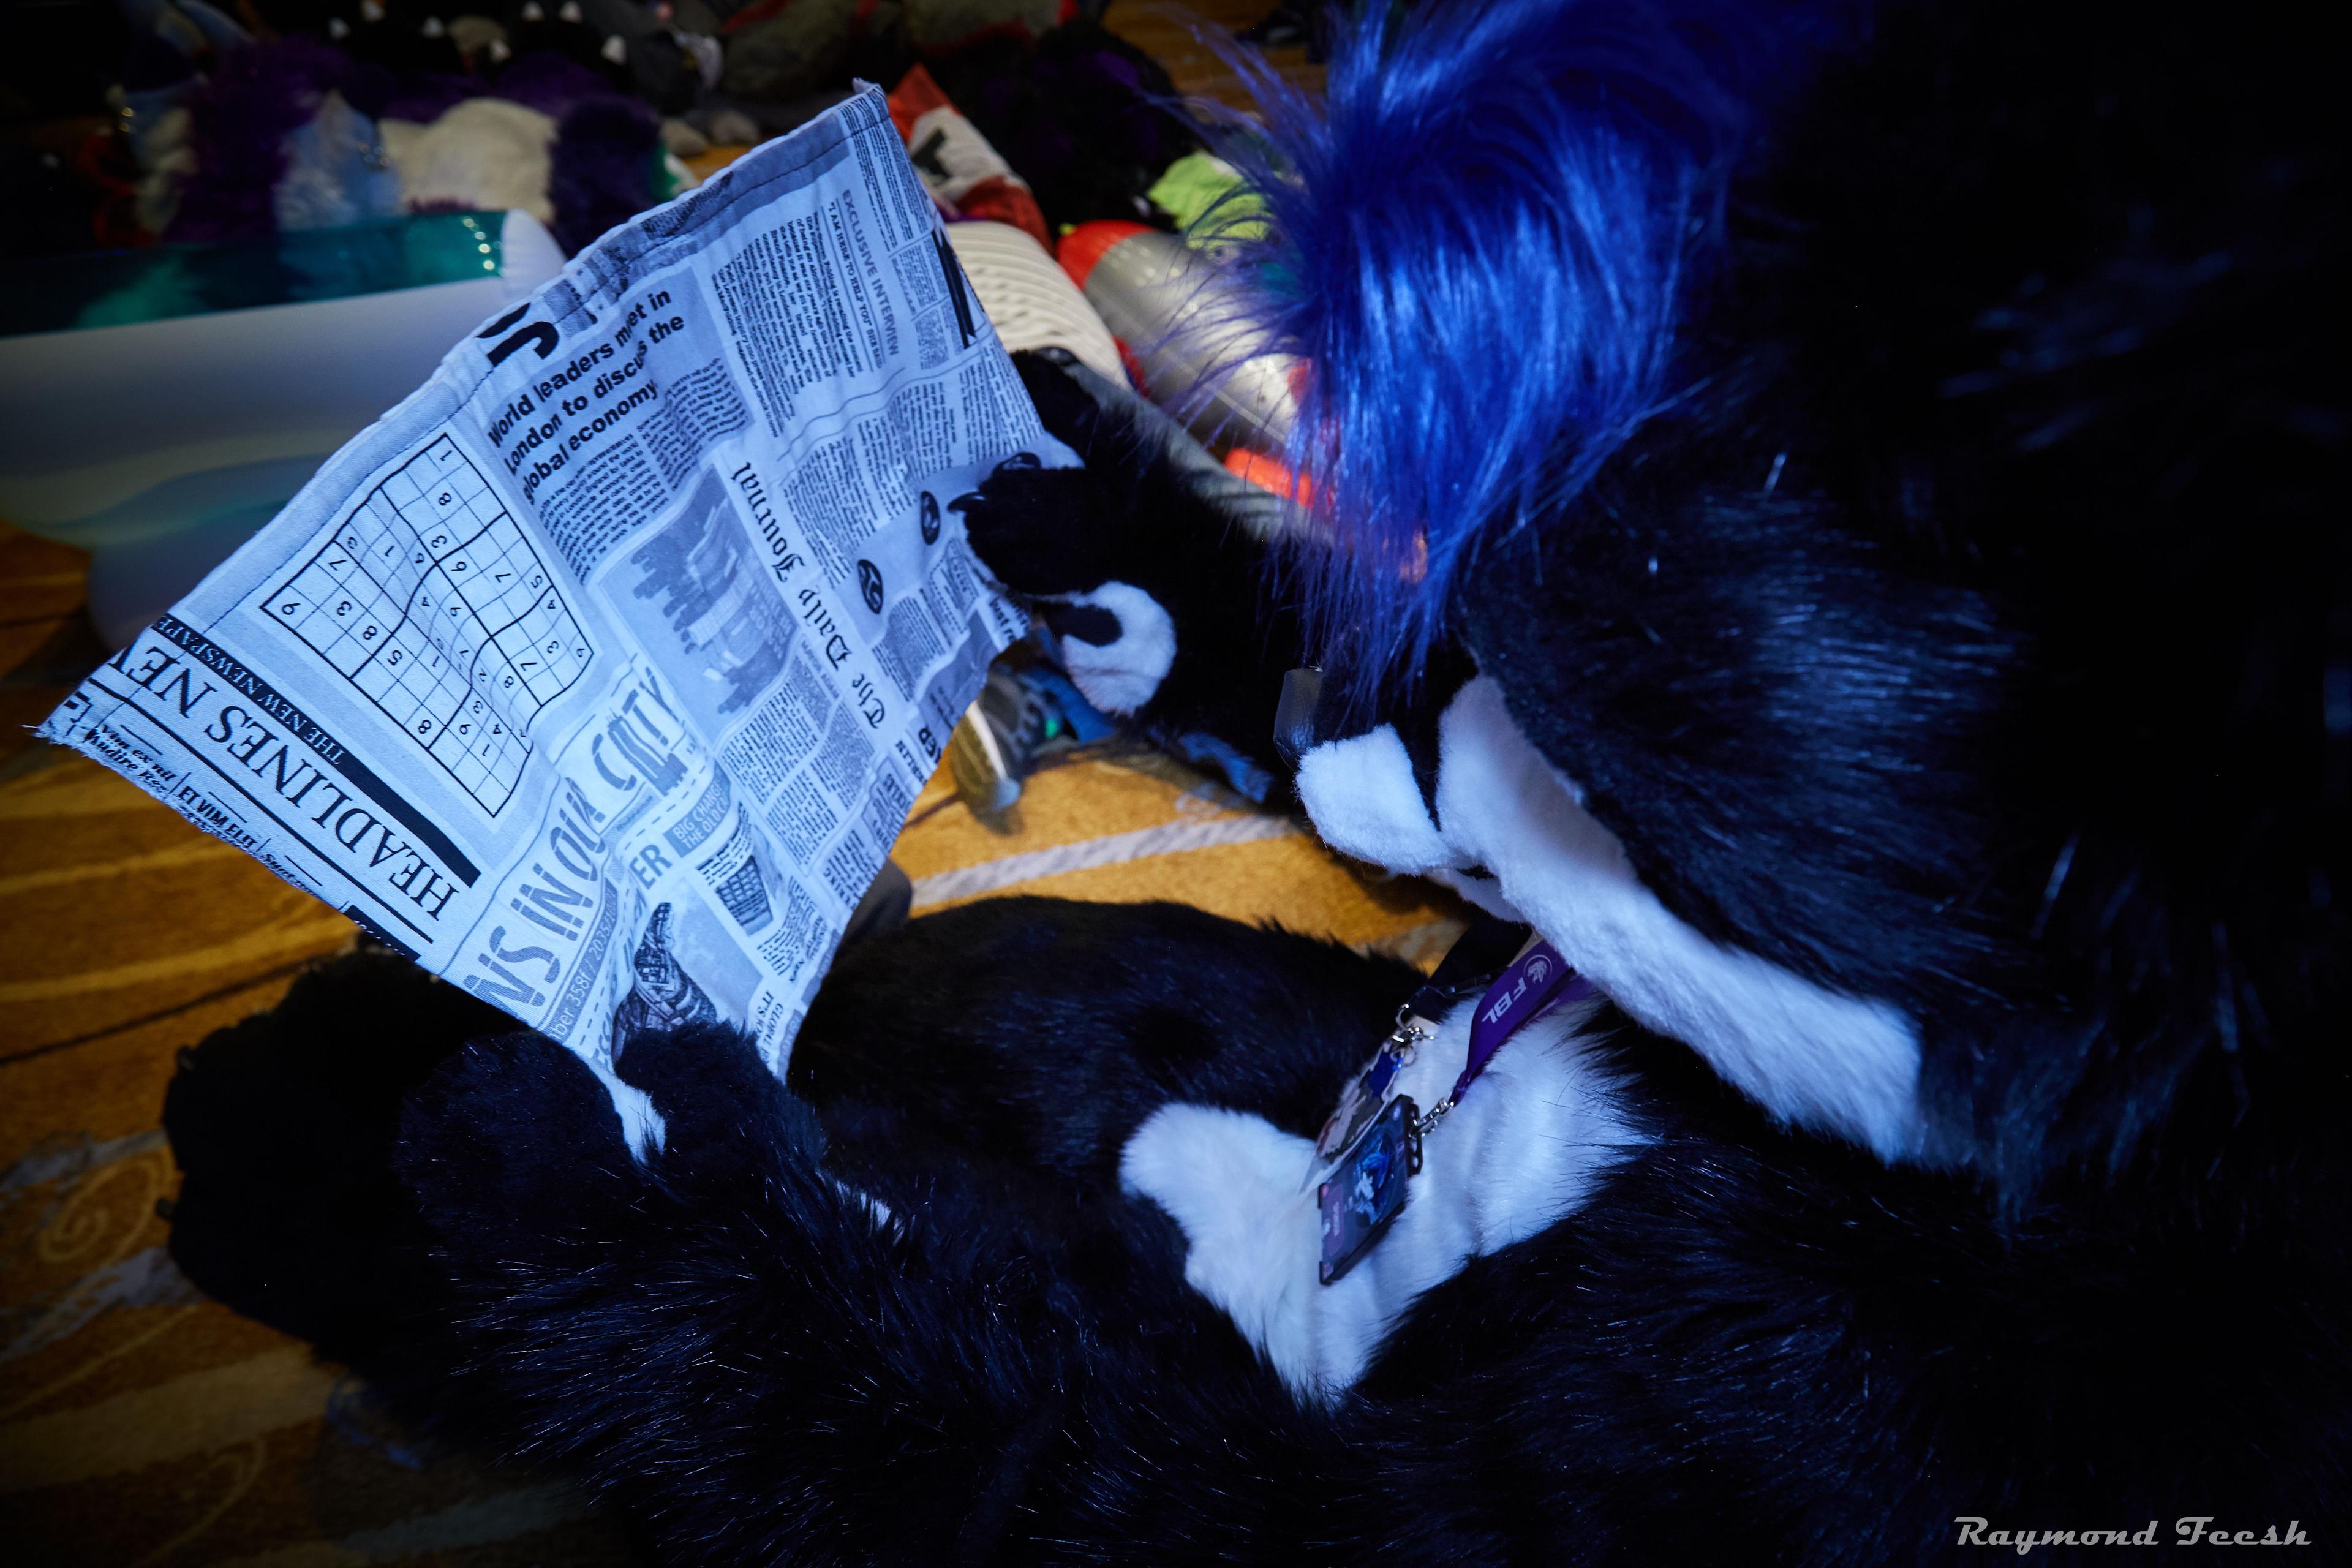 A fursuiter reading a newspaper